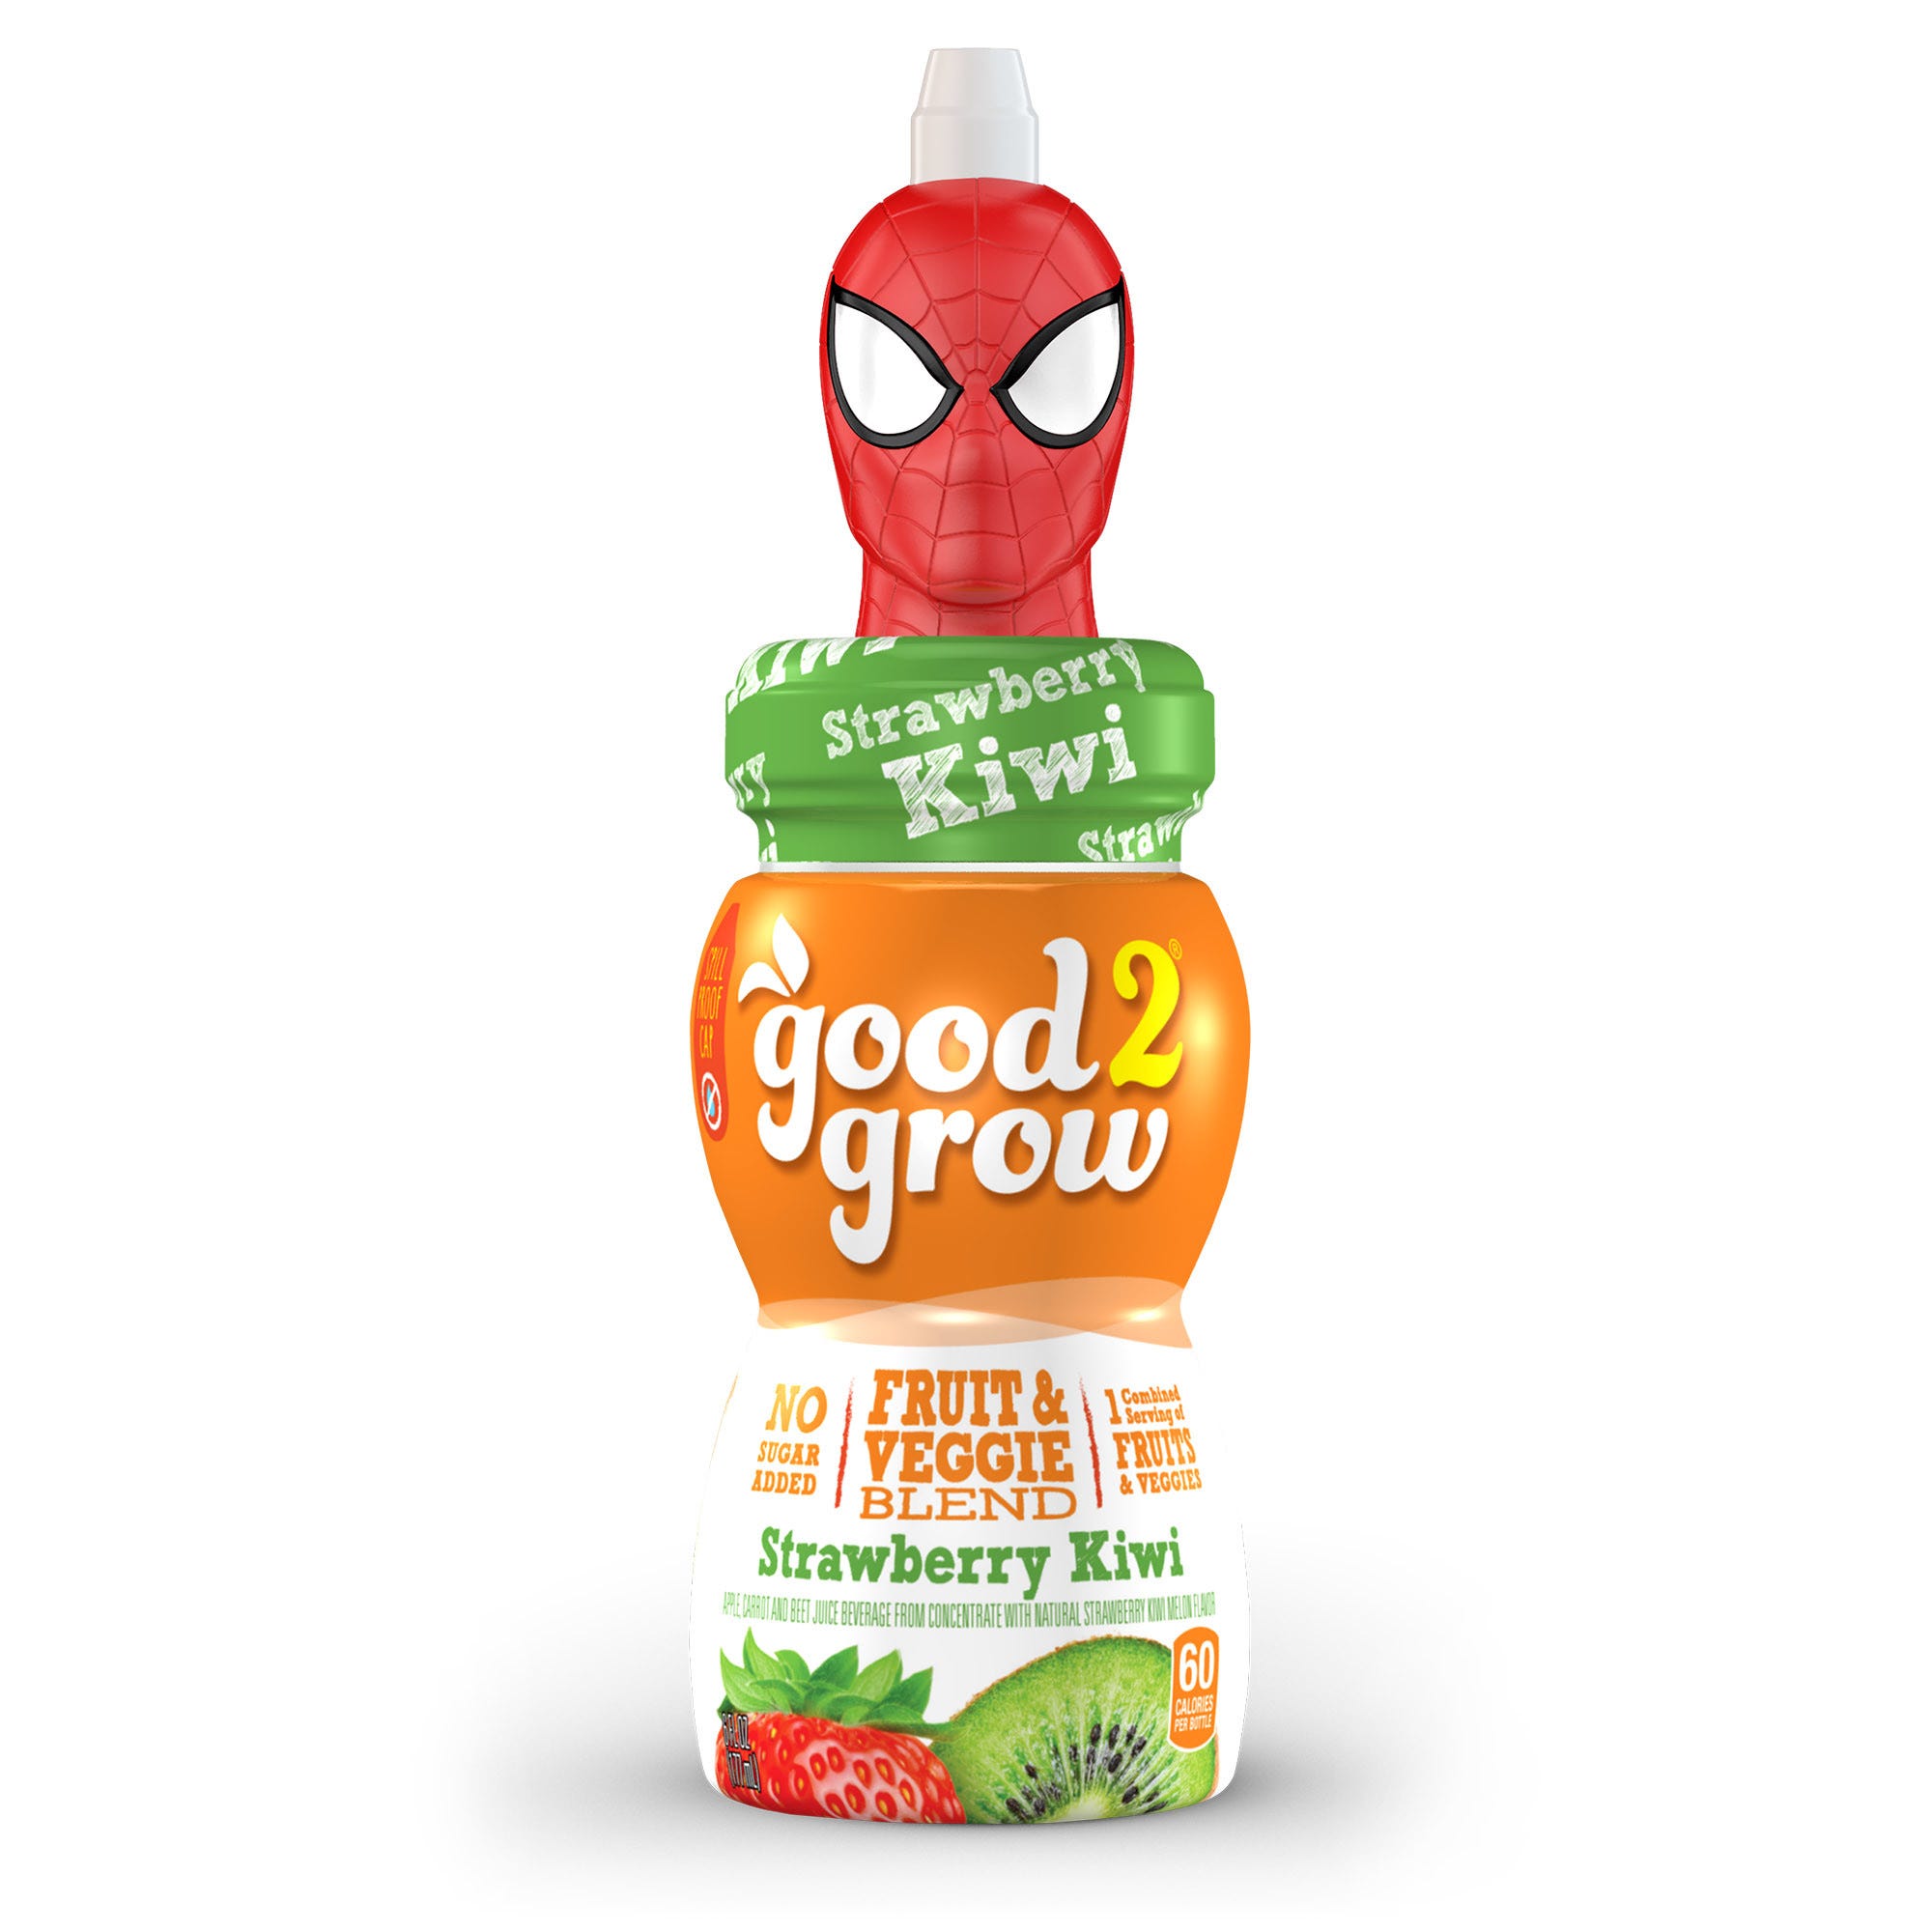 Good2Grow Strawberry Kiwi Fruit & Veggie Blend, Assorted Character Tops - 6 oz